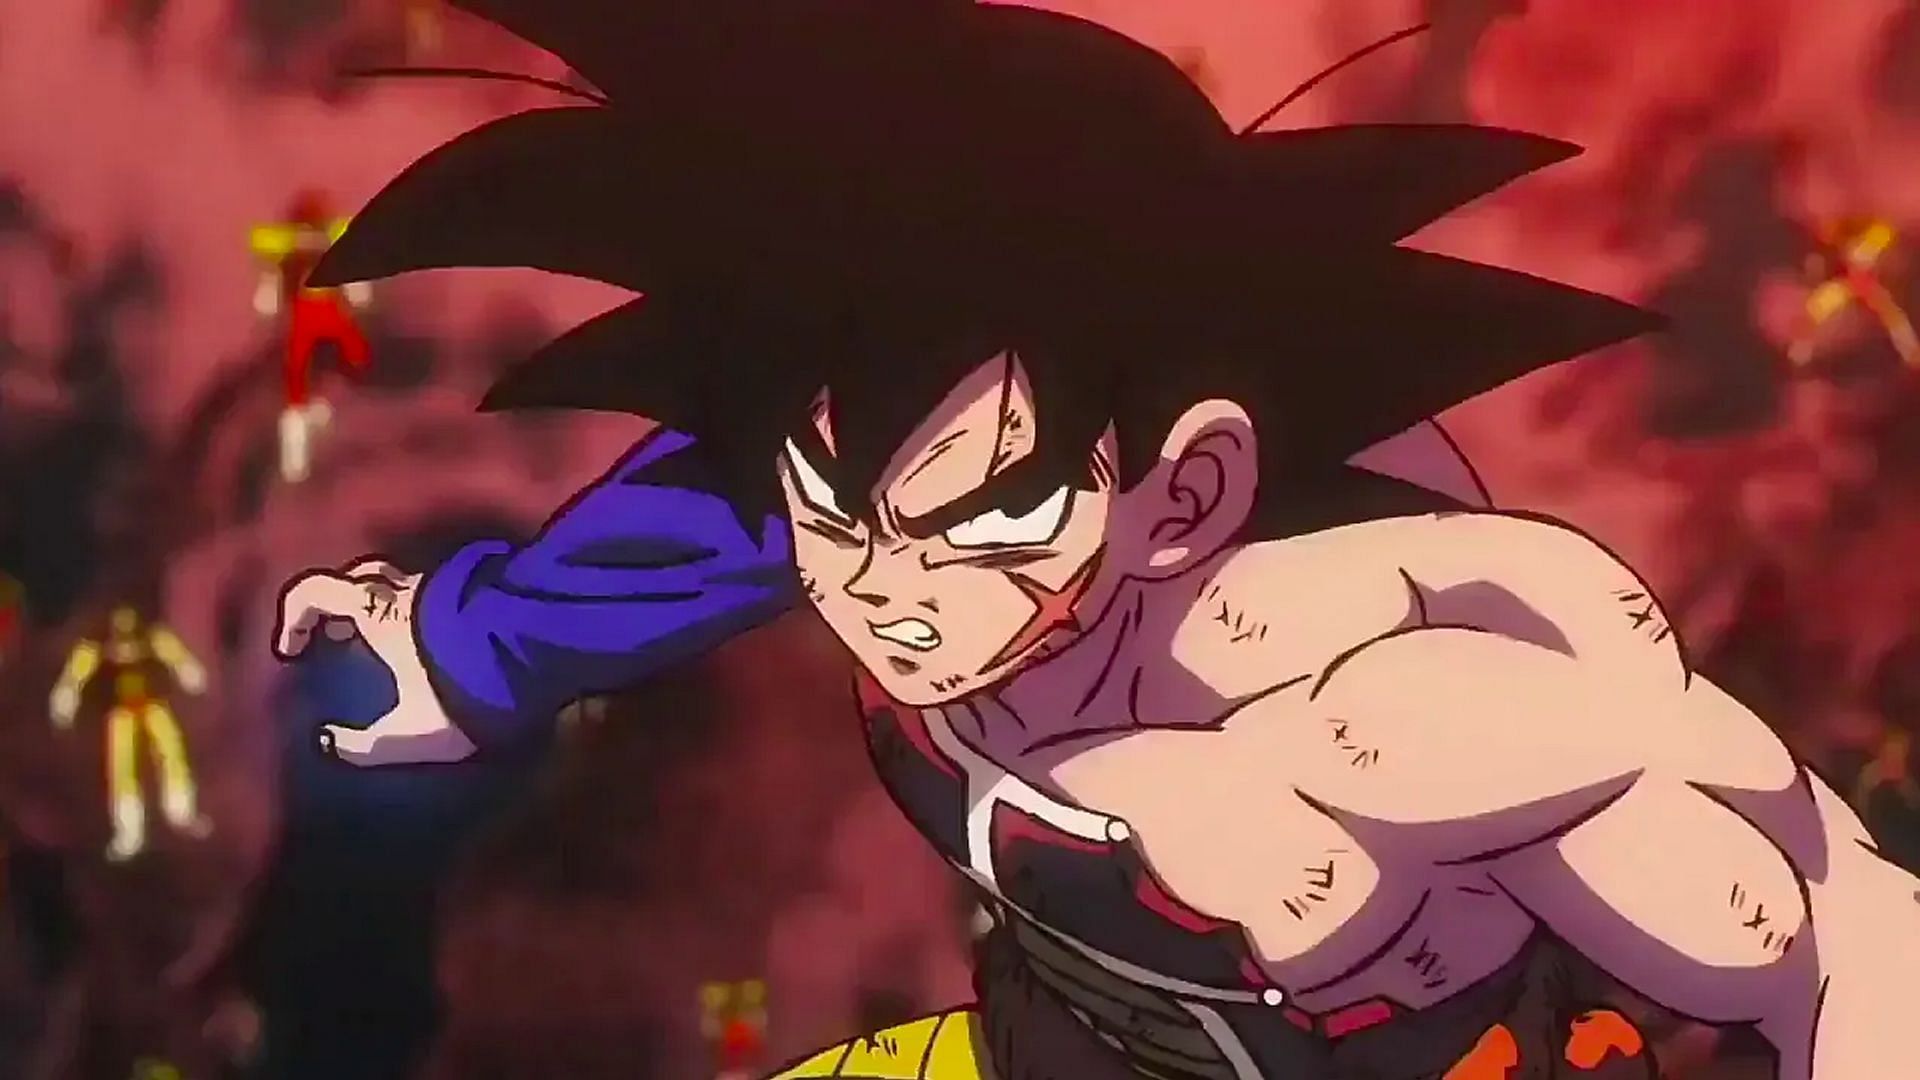 Bardock as seen in the Dragon Ball Super anime (Image via Toei Aniation)